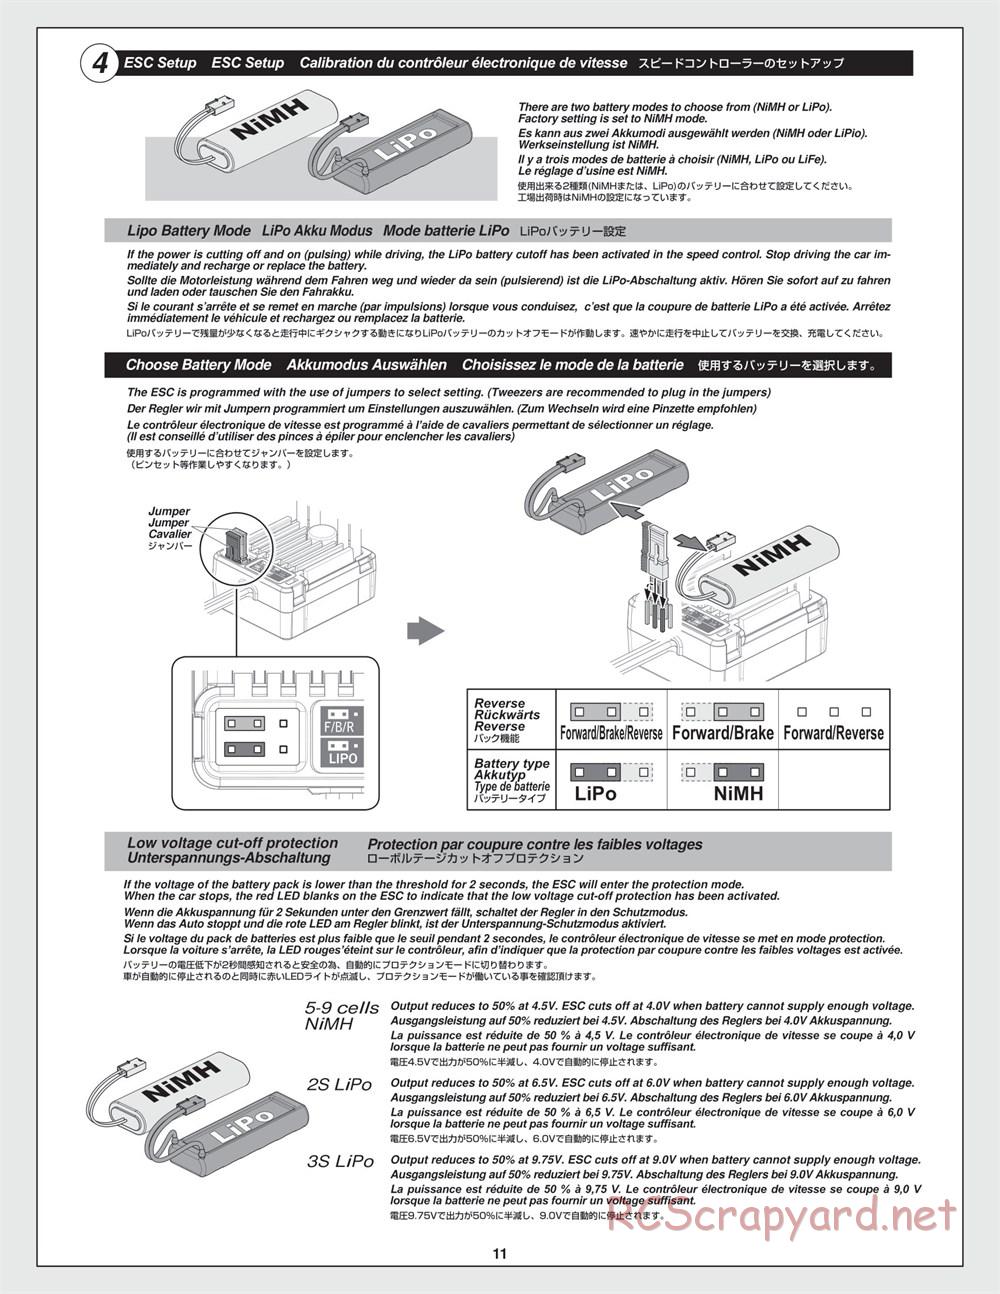 HPI - E10 Drift - Manual - Page 11